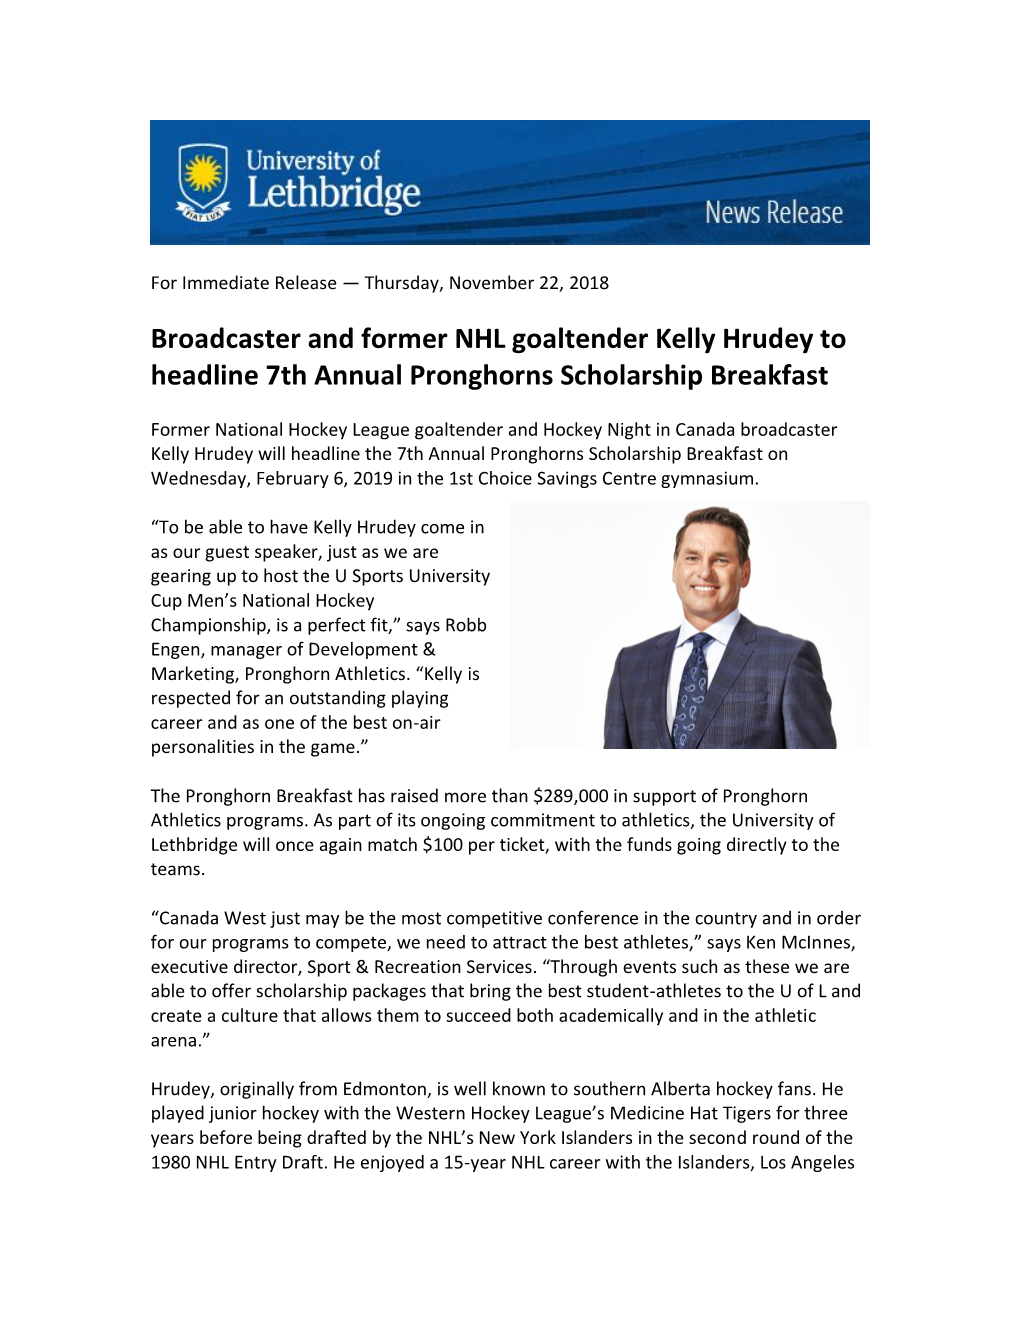 Broadcaster and Former NHL Goaltender Kelly Hrudey to Headline 7Th Annual Pronghorns Scholarship Breakfast